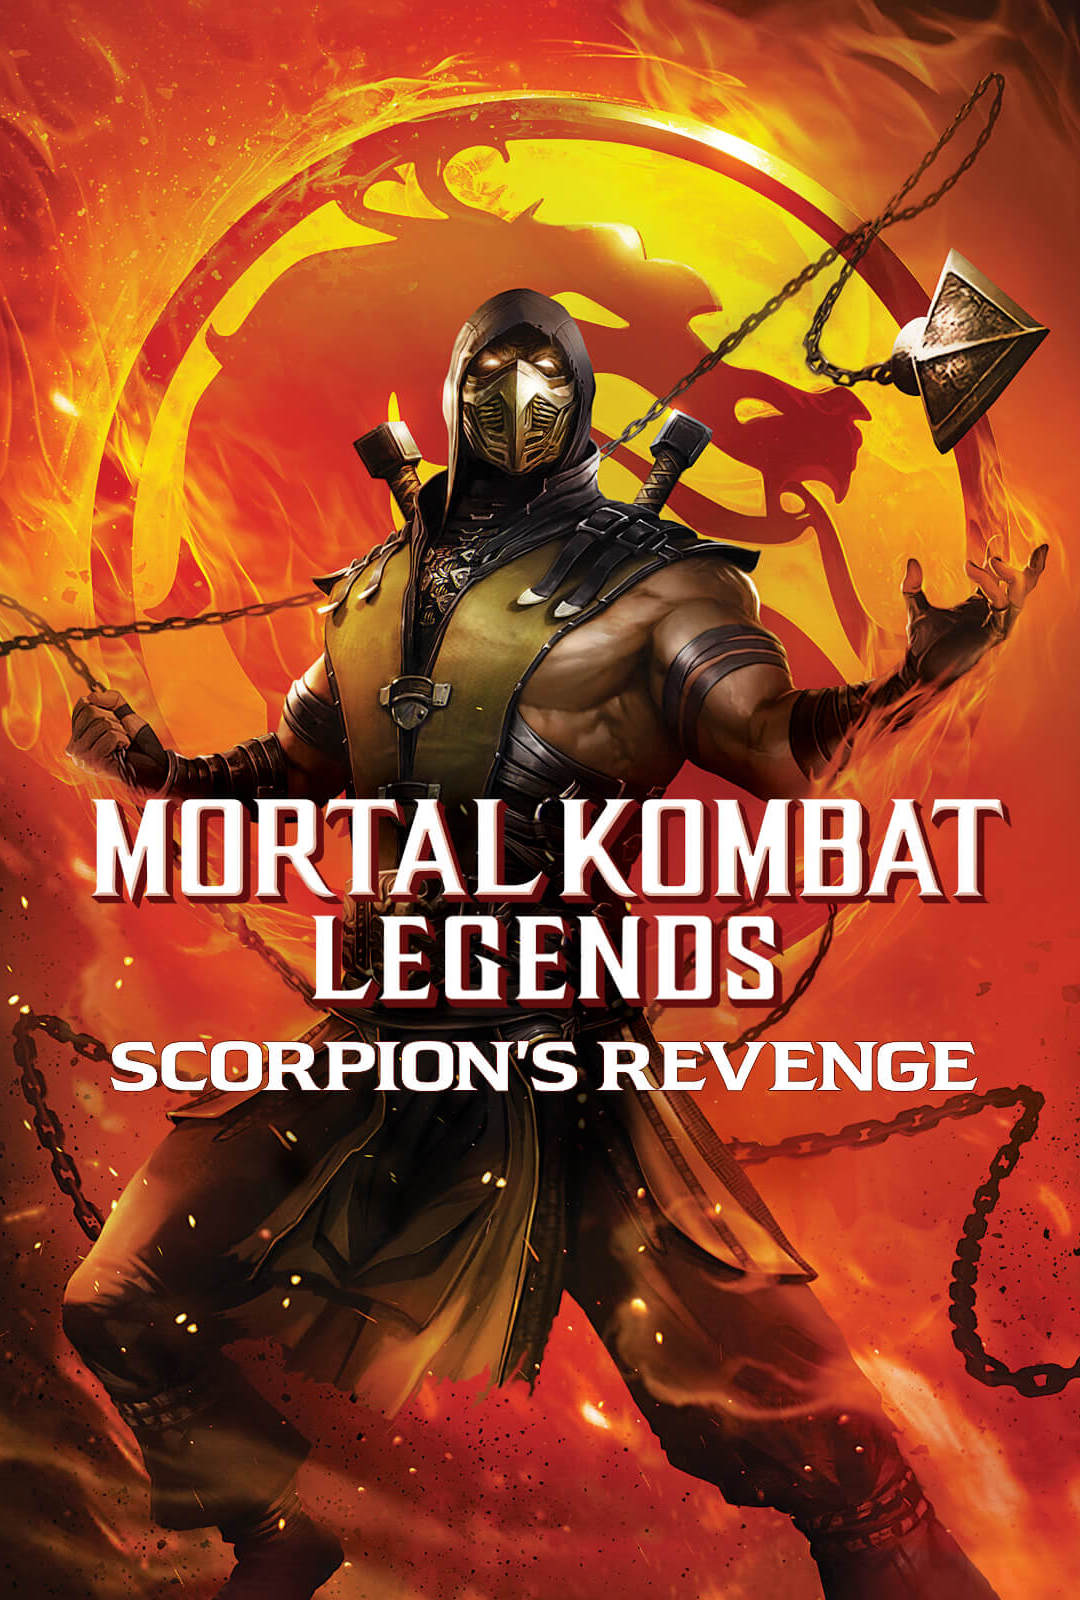 Mortal Kombat Legends: Scorpion’s Revenge (2020) Jennifer Carpenter